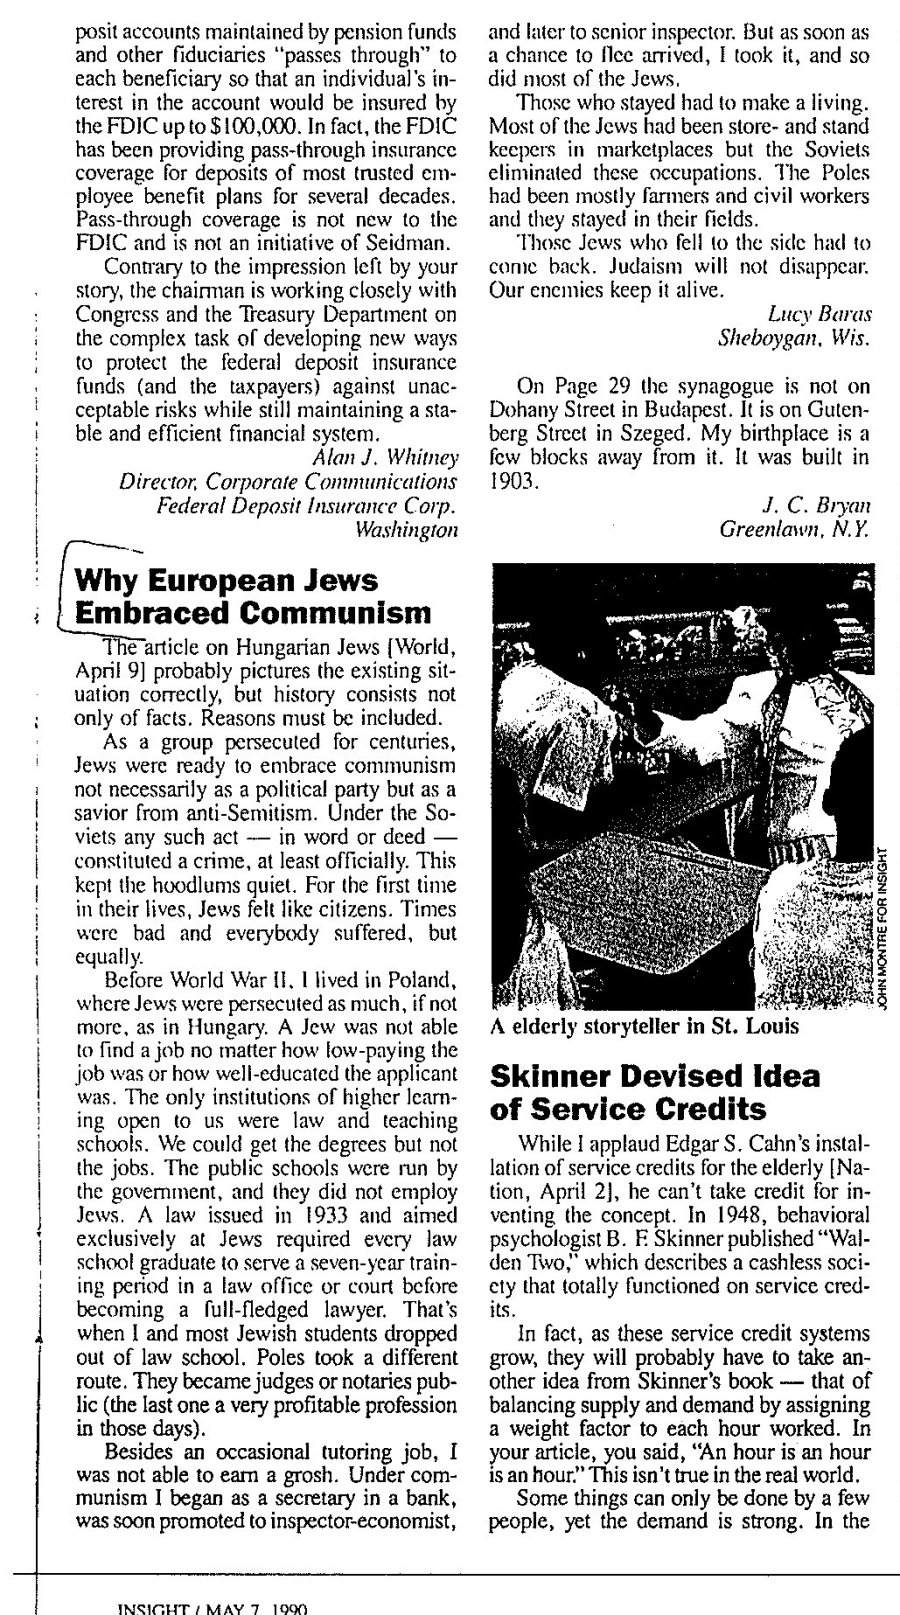 Why European Jews Embraced Communism